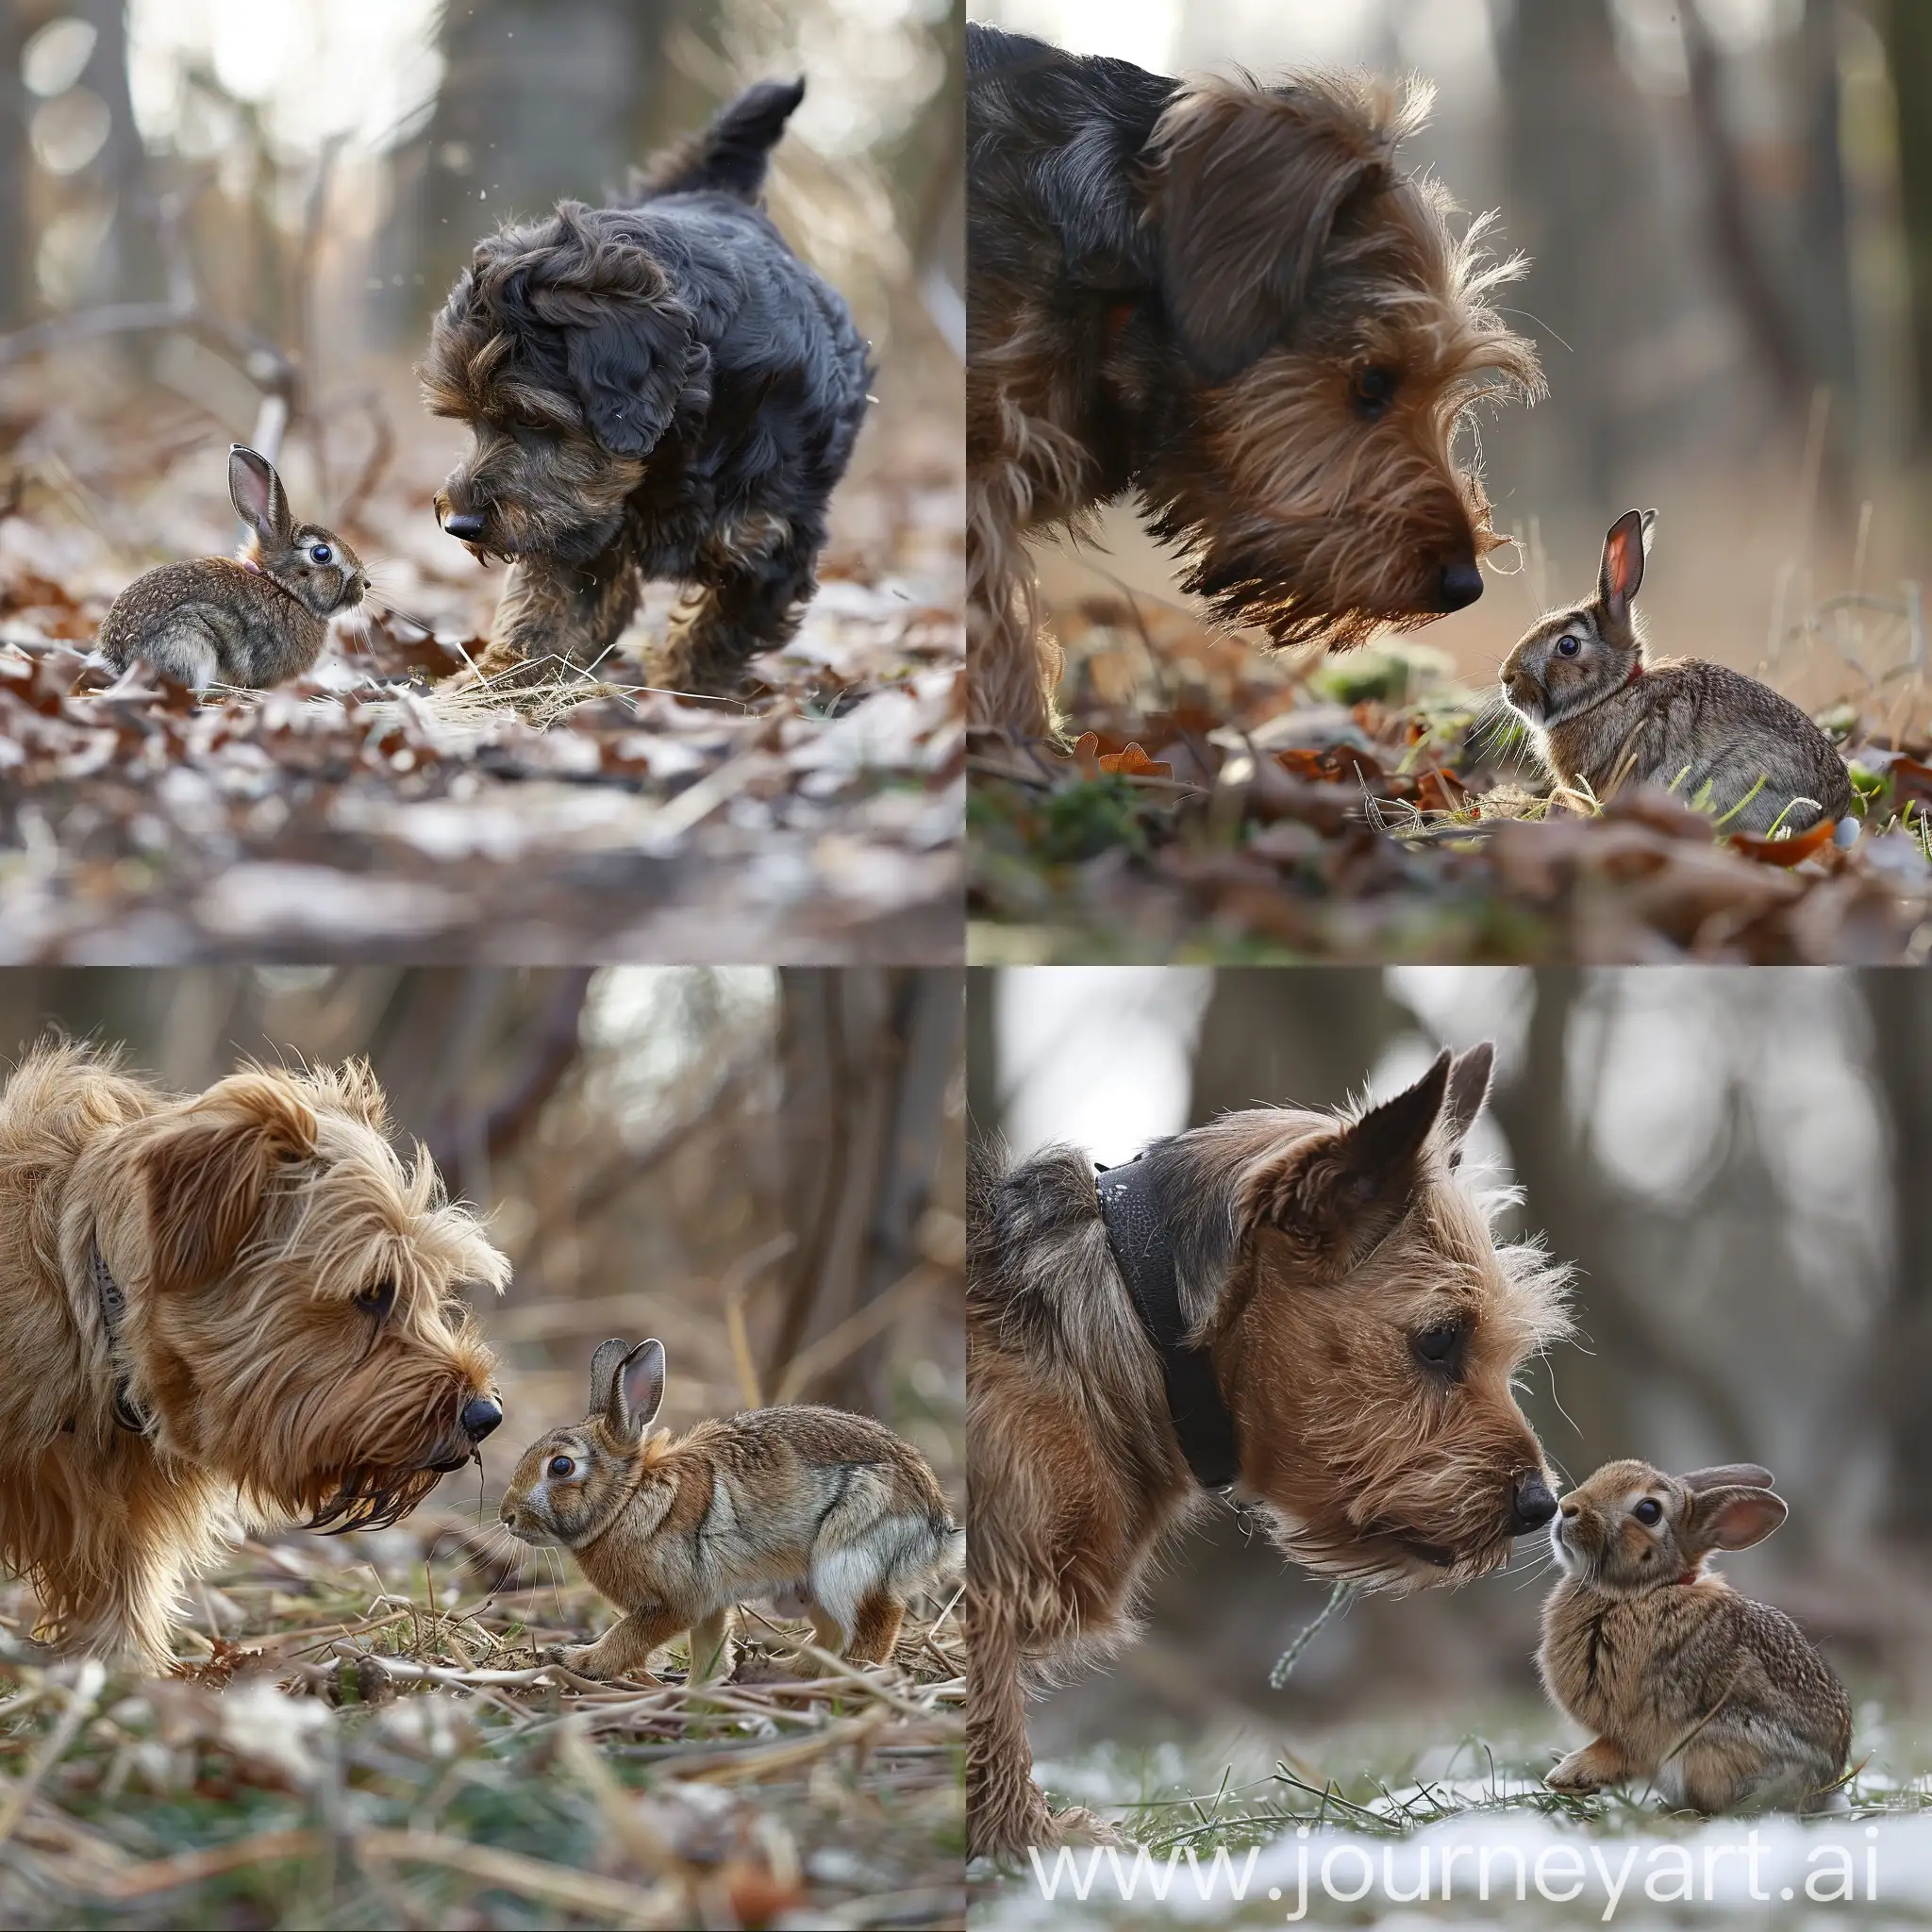 Griffon korthals dog hunting a rabbit